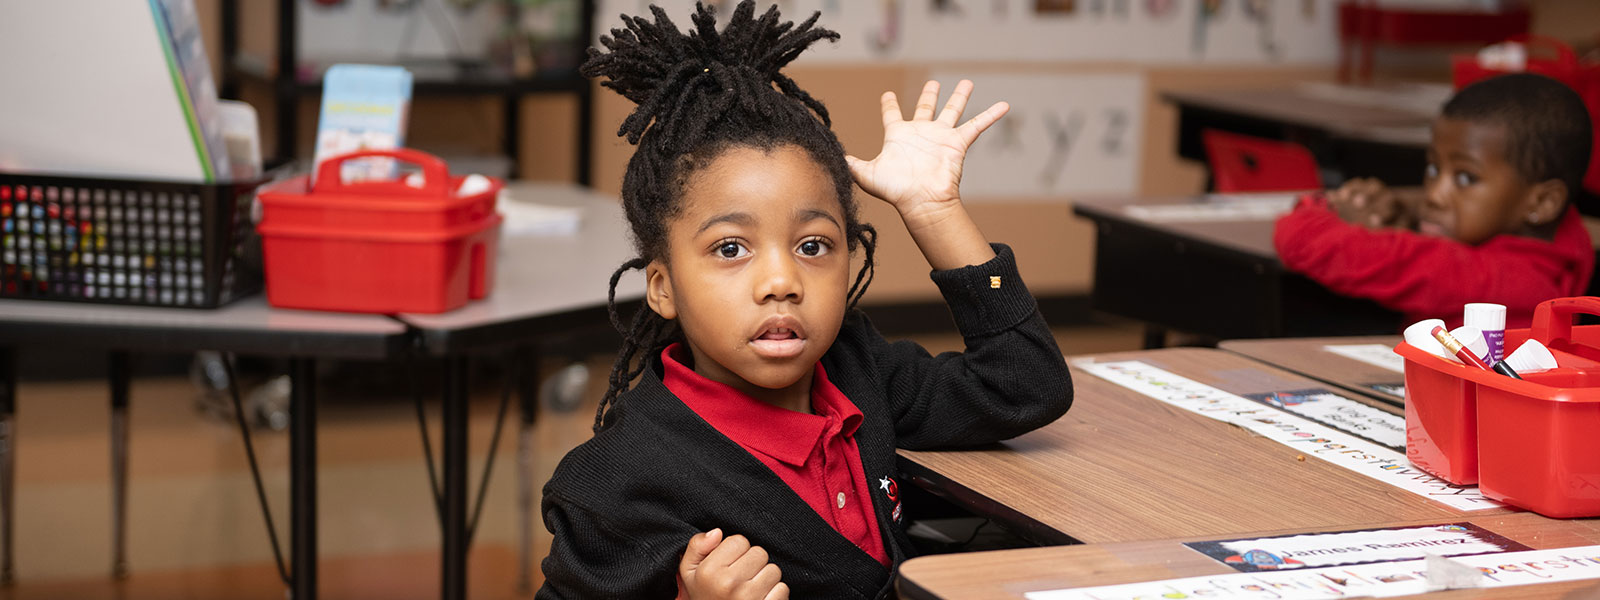 Little girl sitting at a desk raising her hand